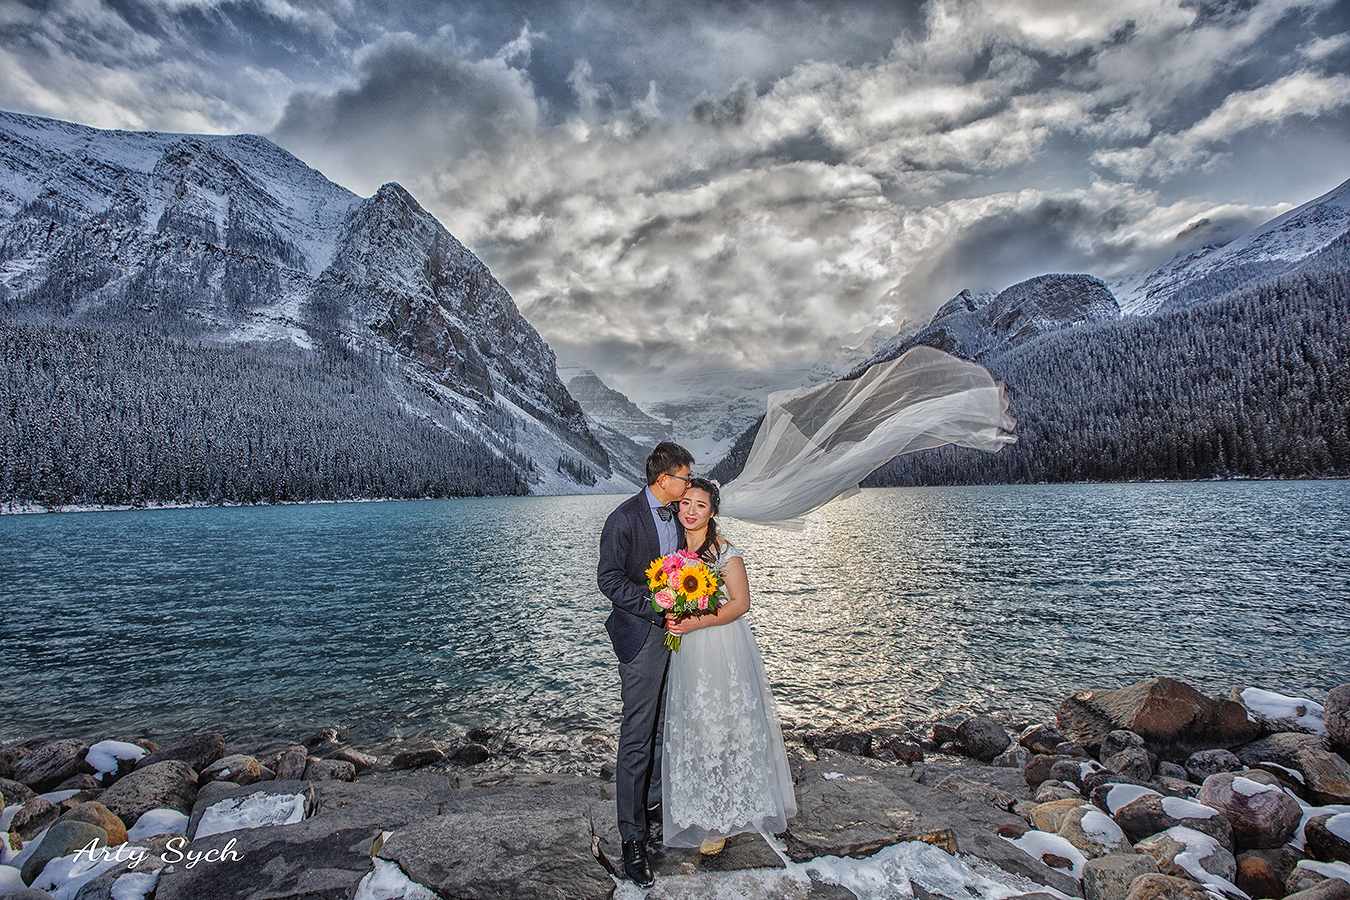 Calgary Edmonton wedding photography_arty_films_arty_sych_